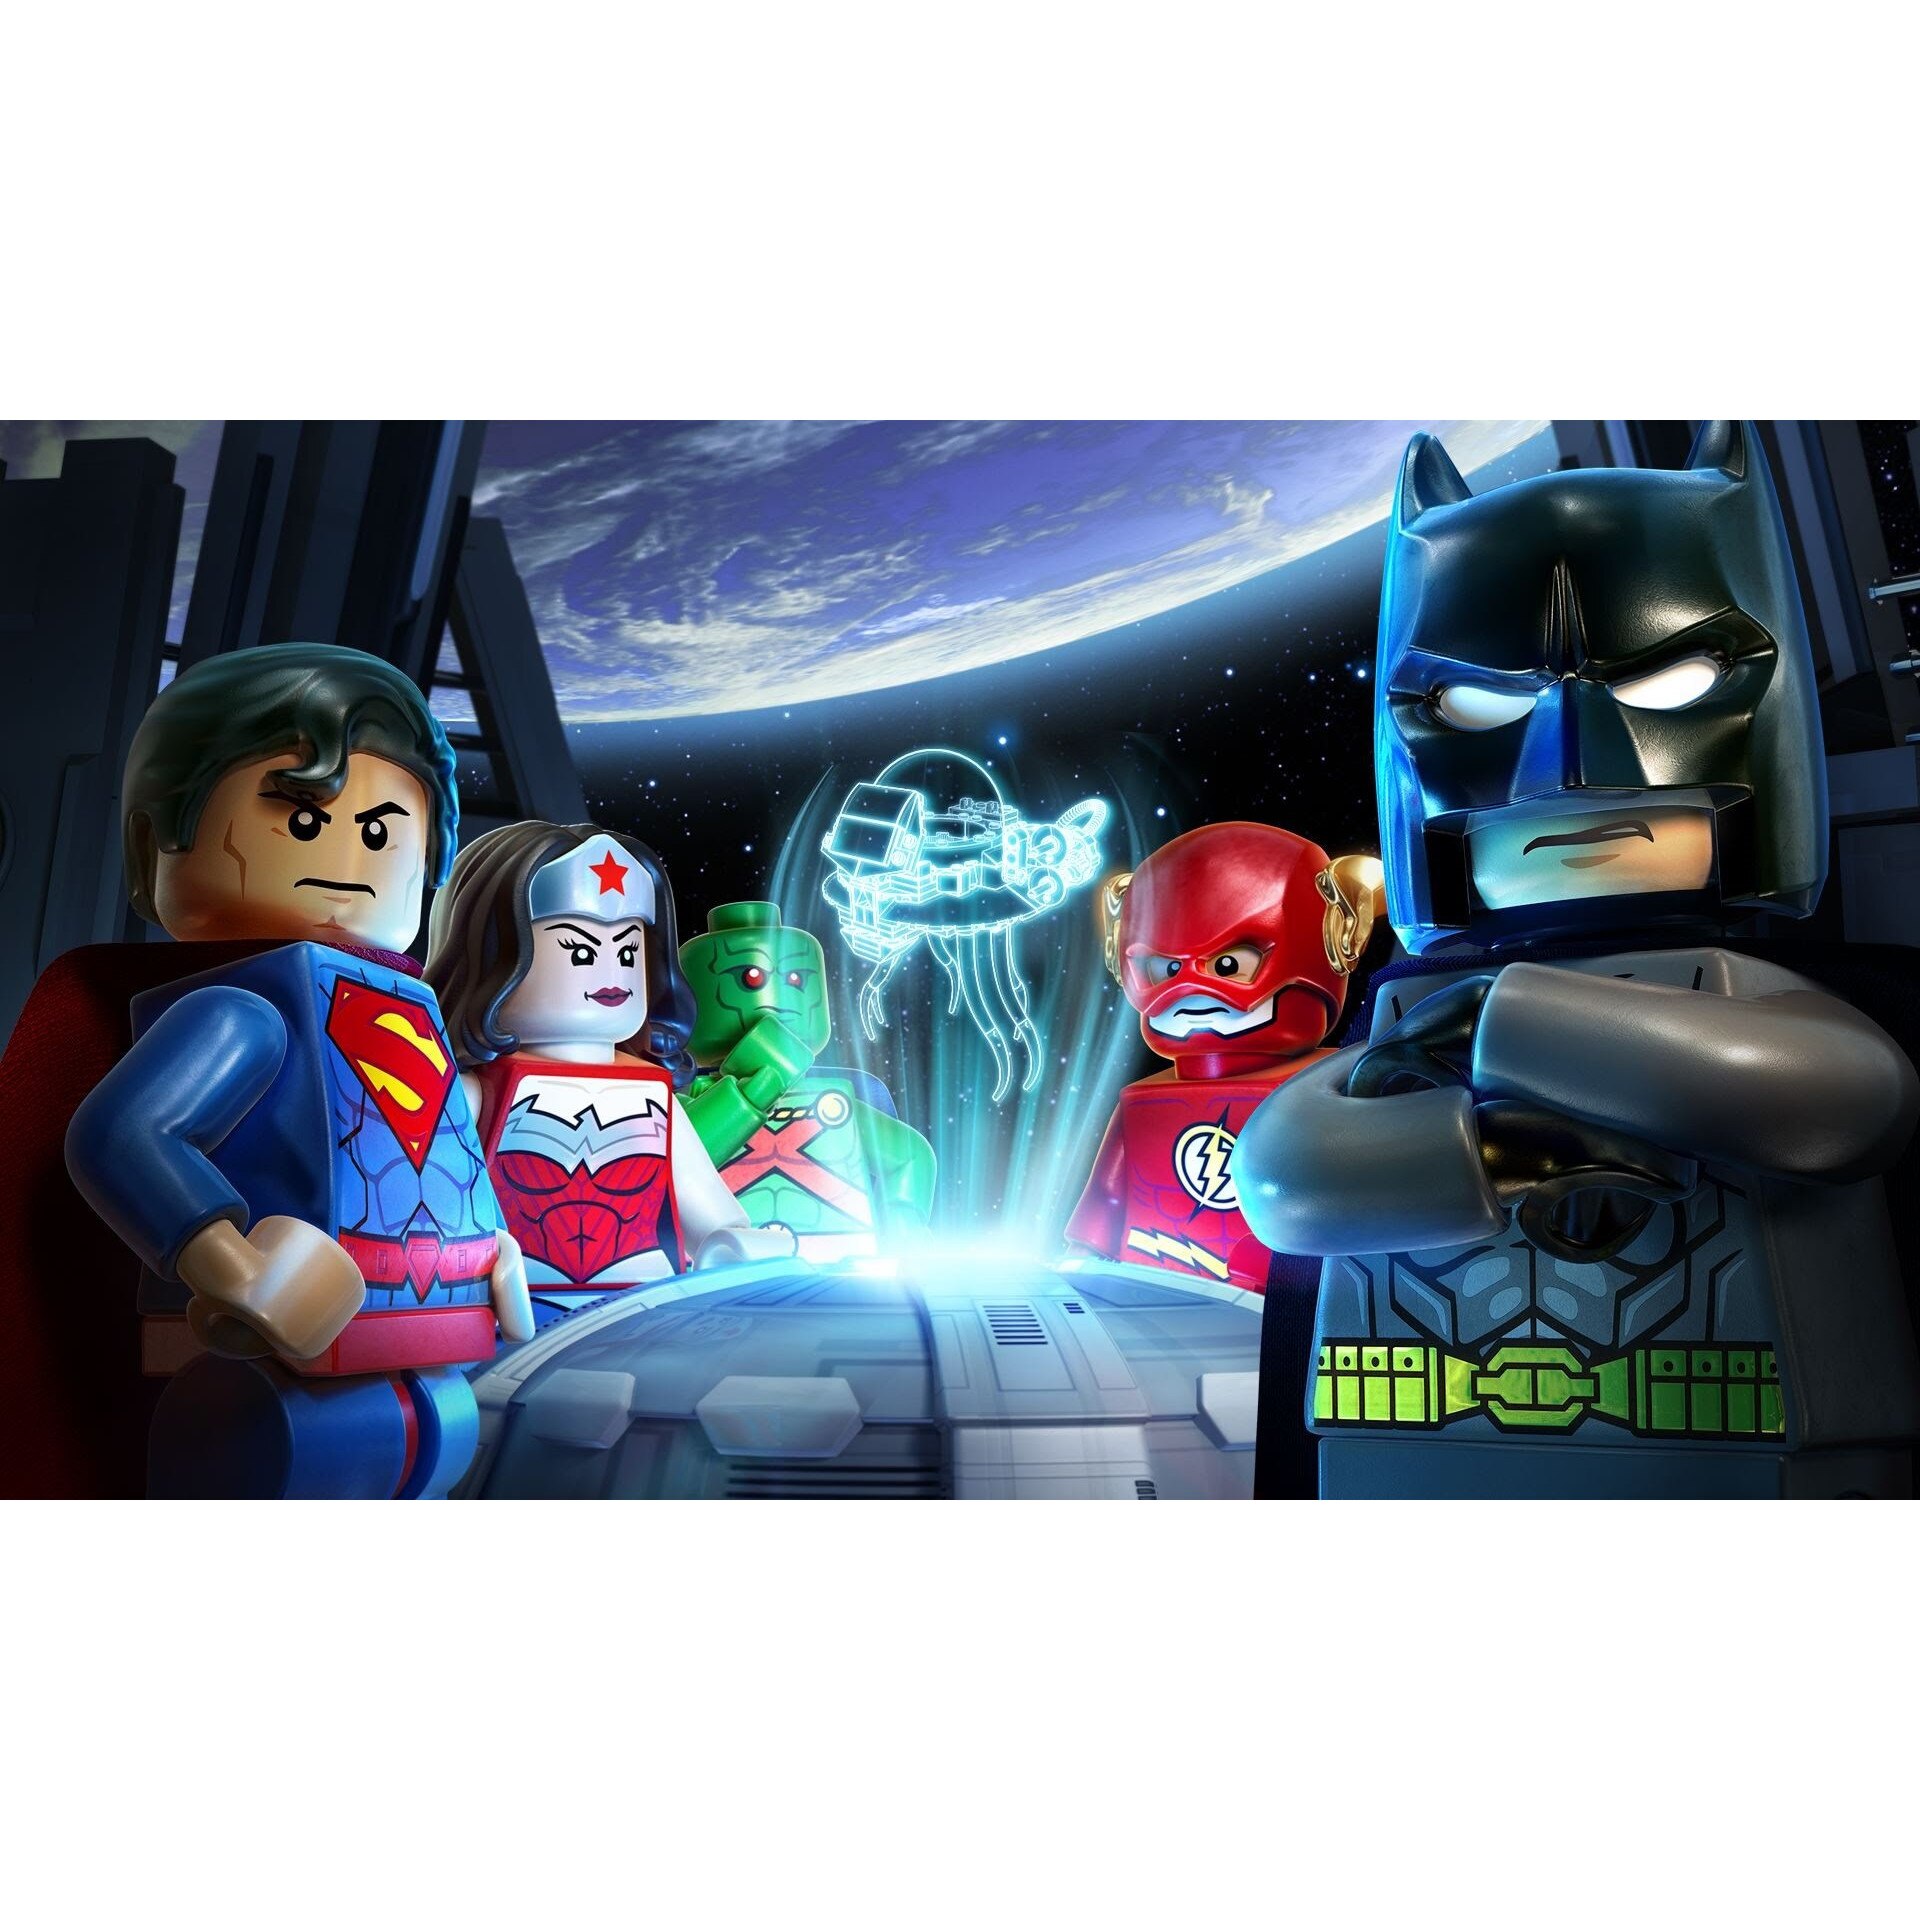 Jogo LEGO Batman 3: Beyond Gotham - Xbox 360 (USADO) - Tabular Games